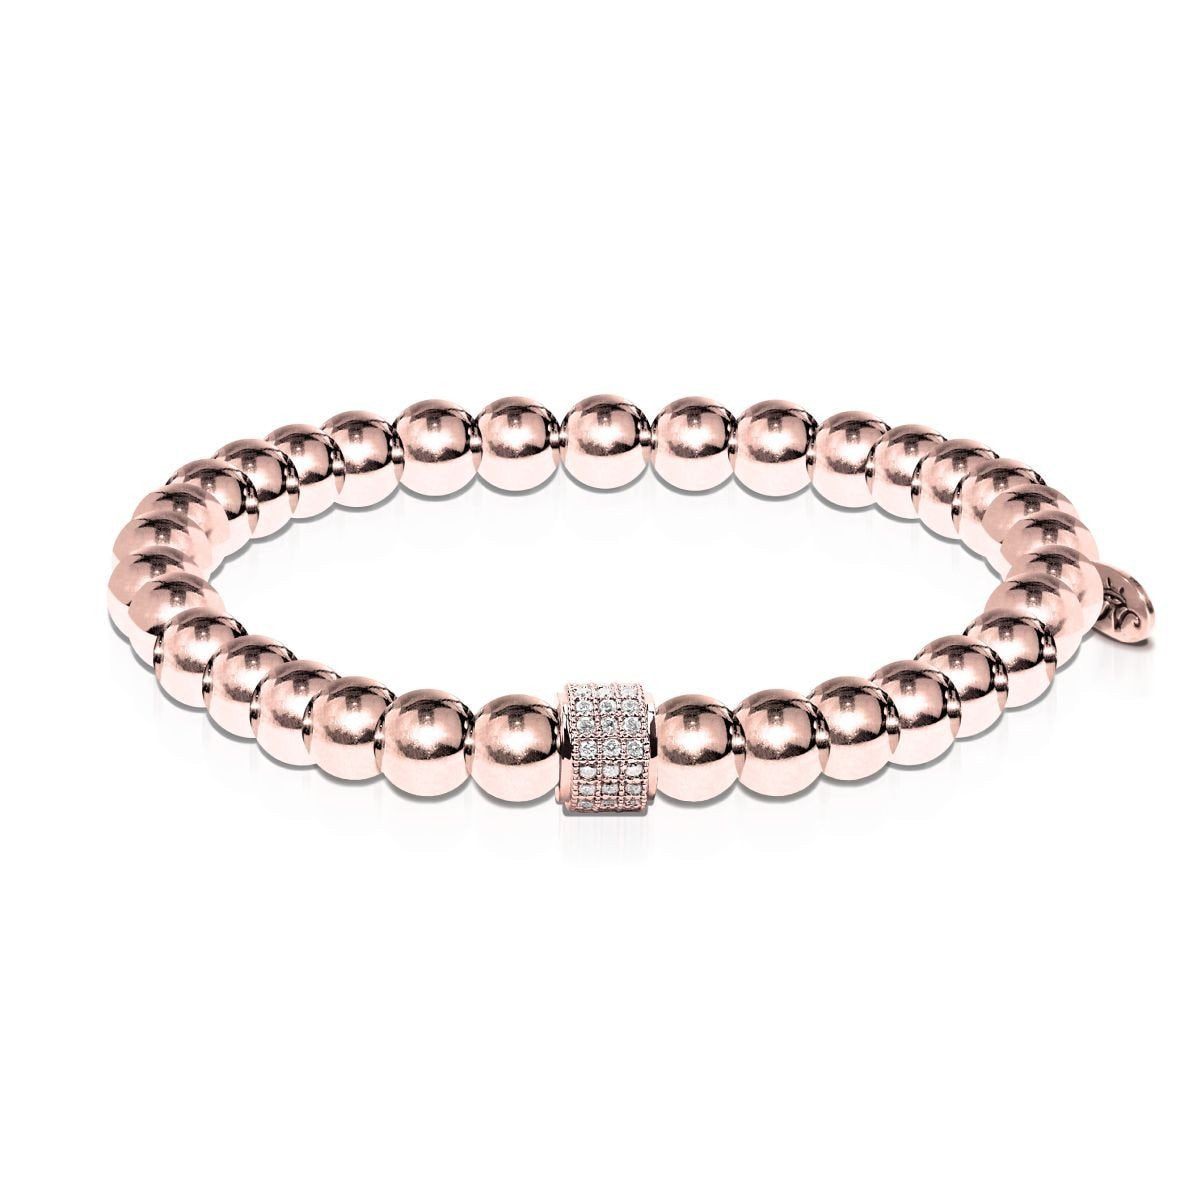 New design bracelet|bracelet Kaise banaen|#Customjewelry@OmbVarma-tb6yq -  YouTube